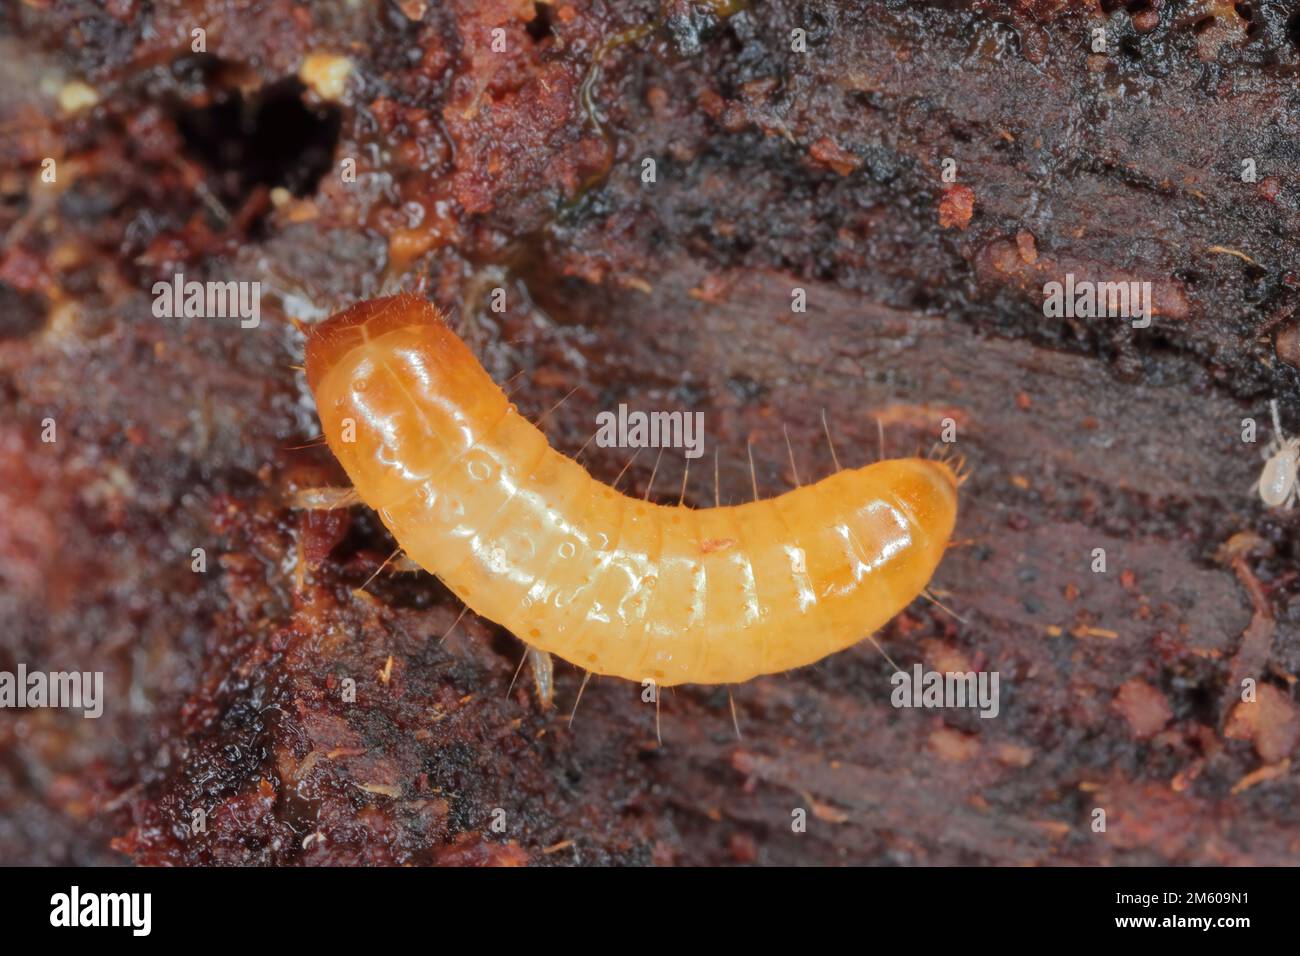 A Darkling Beetle (Tenebrionidae) larva under the bark of a dead tree. Stock Photo